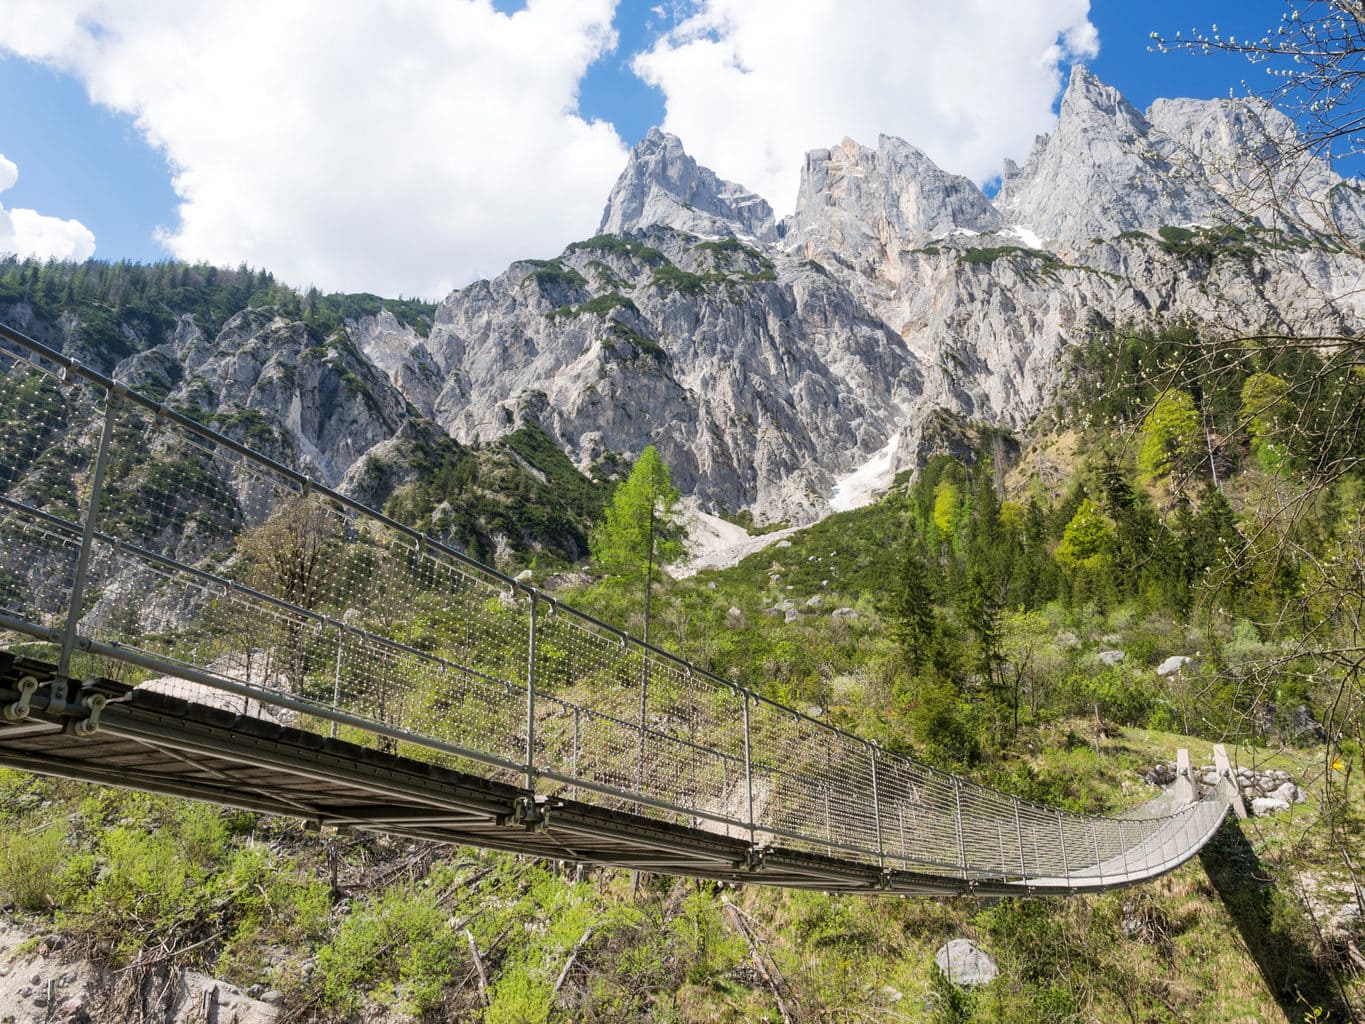 De spectaculaire hangbrug over de Klausbach in Berchtesgaden in de Duitse Alpen